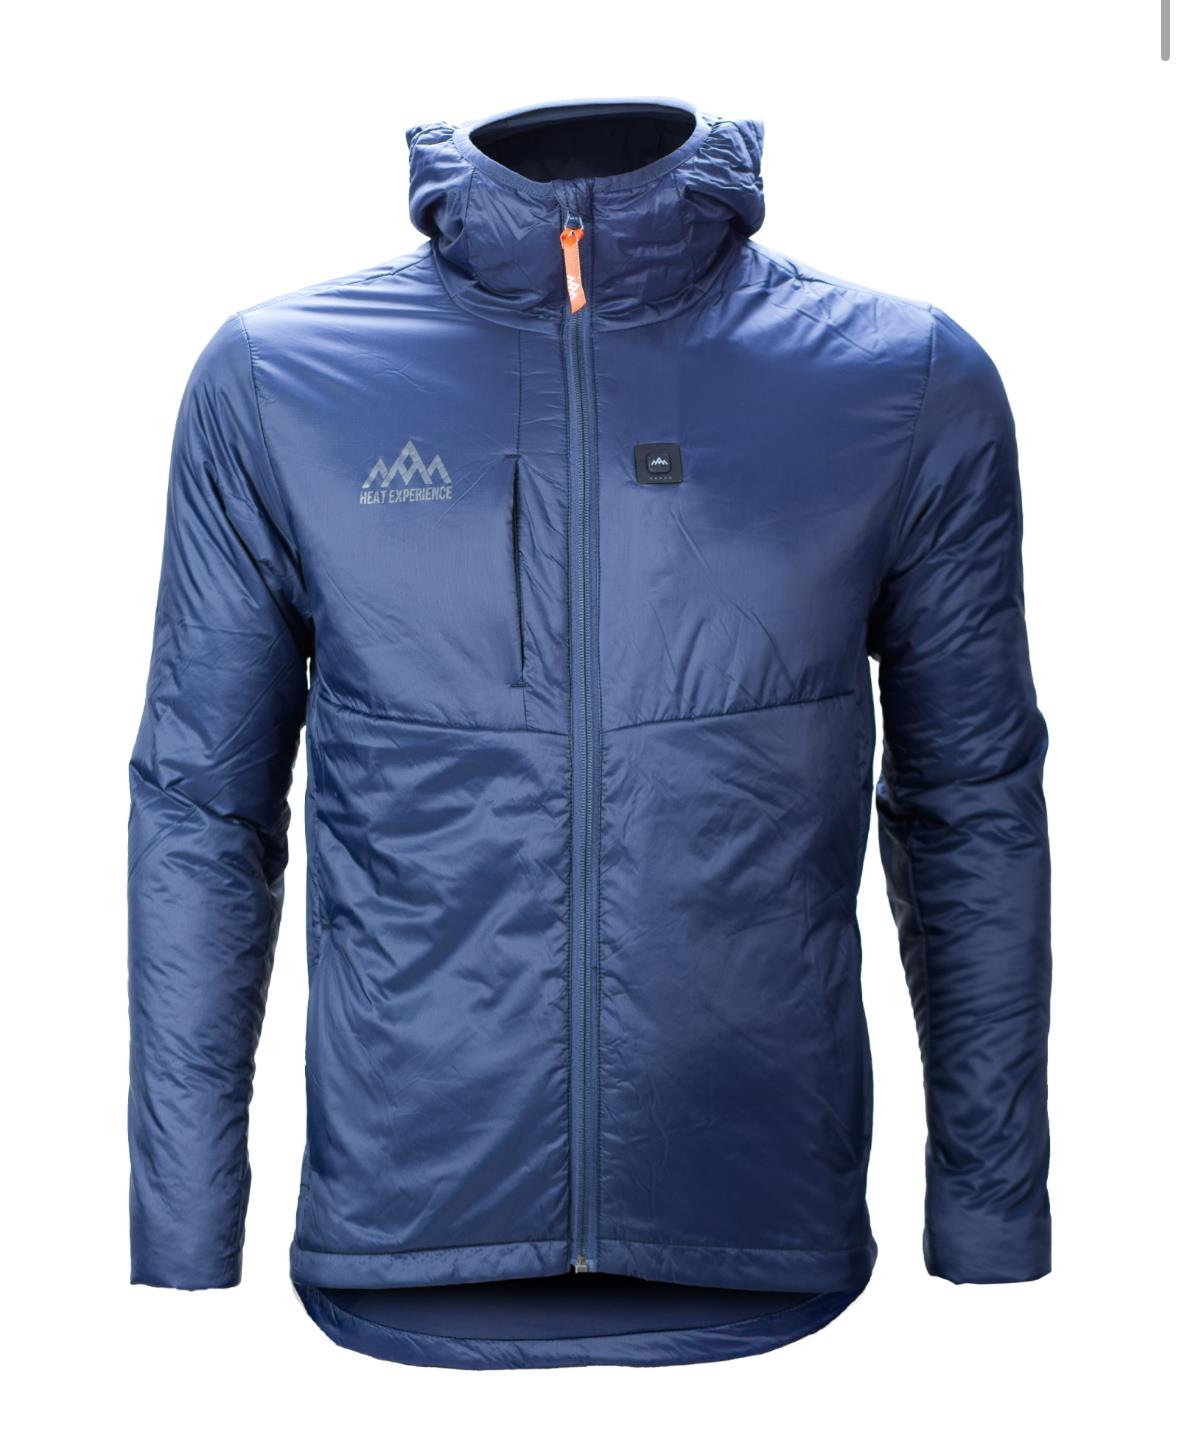 HeatX Hybrid Мужская куртка с подогревом, темно-синяя, XL